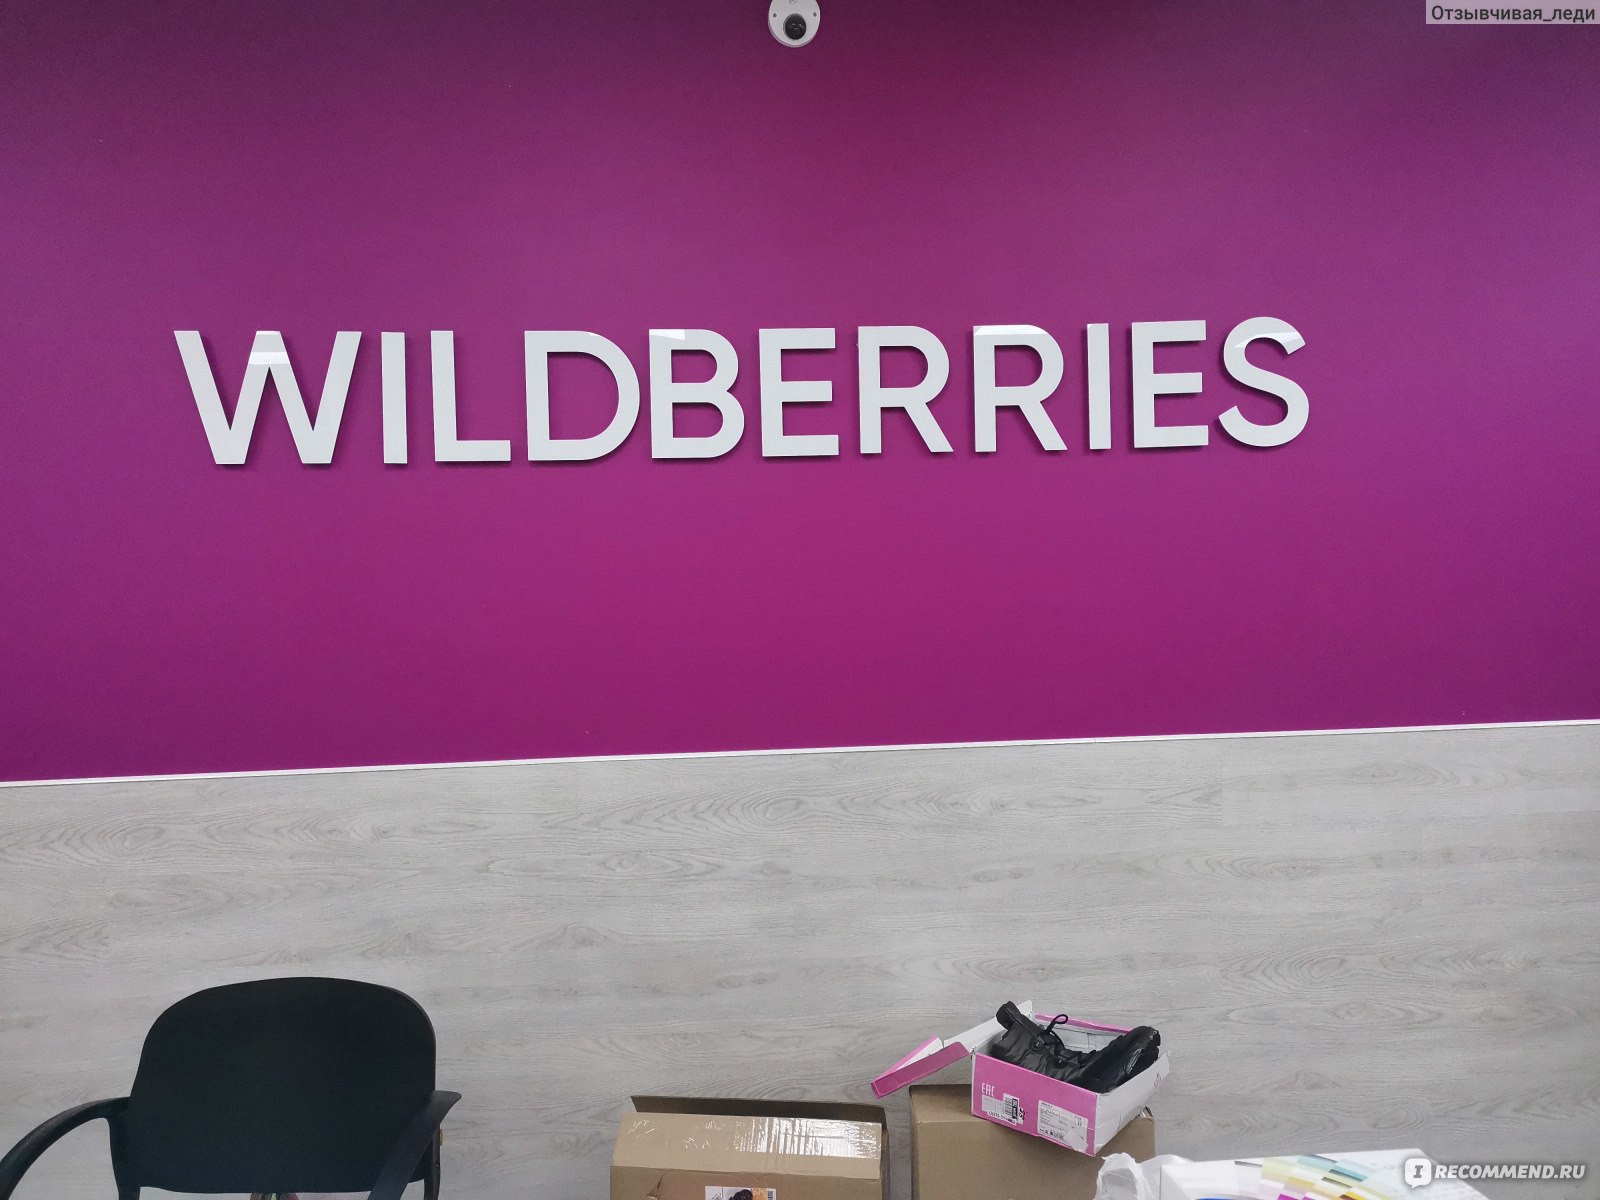 Валдберис бу купить. Wildberries. Валдберрисинтернет магазин. Валдберес фон фирменный. Валдберрисинтернет магазин распродажа.